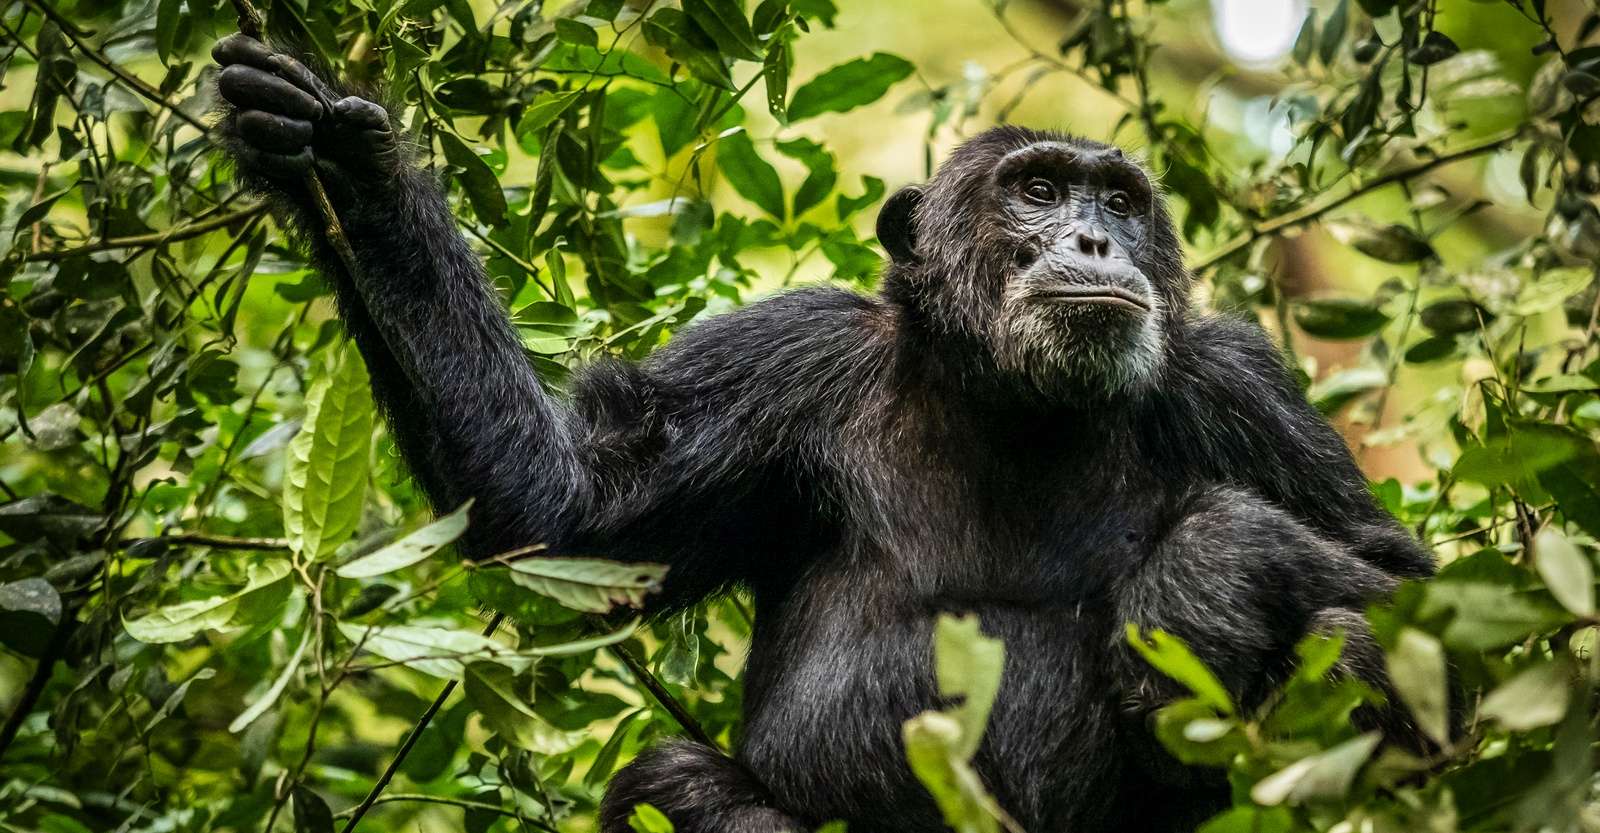 Chimpanzee, Kibale National Park, Uganda.